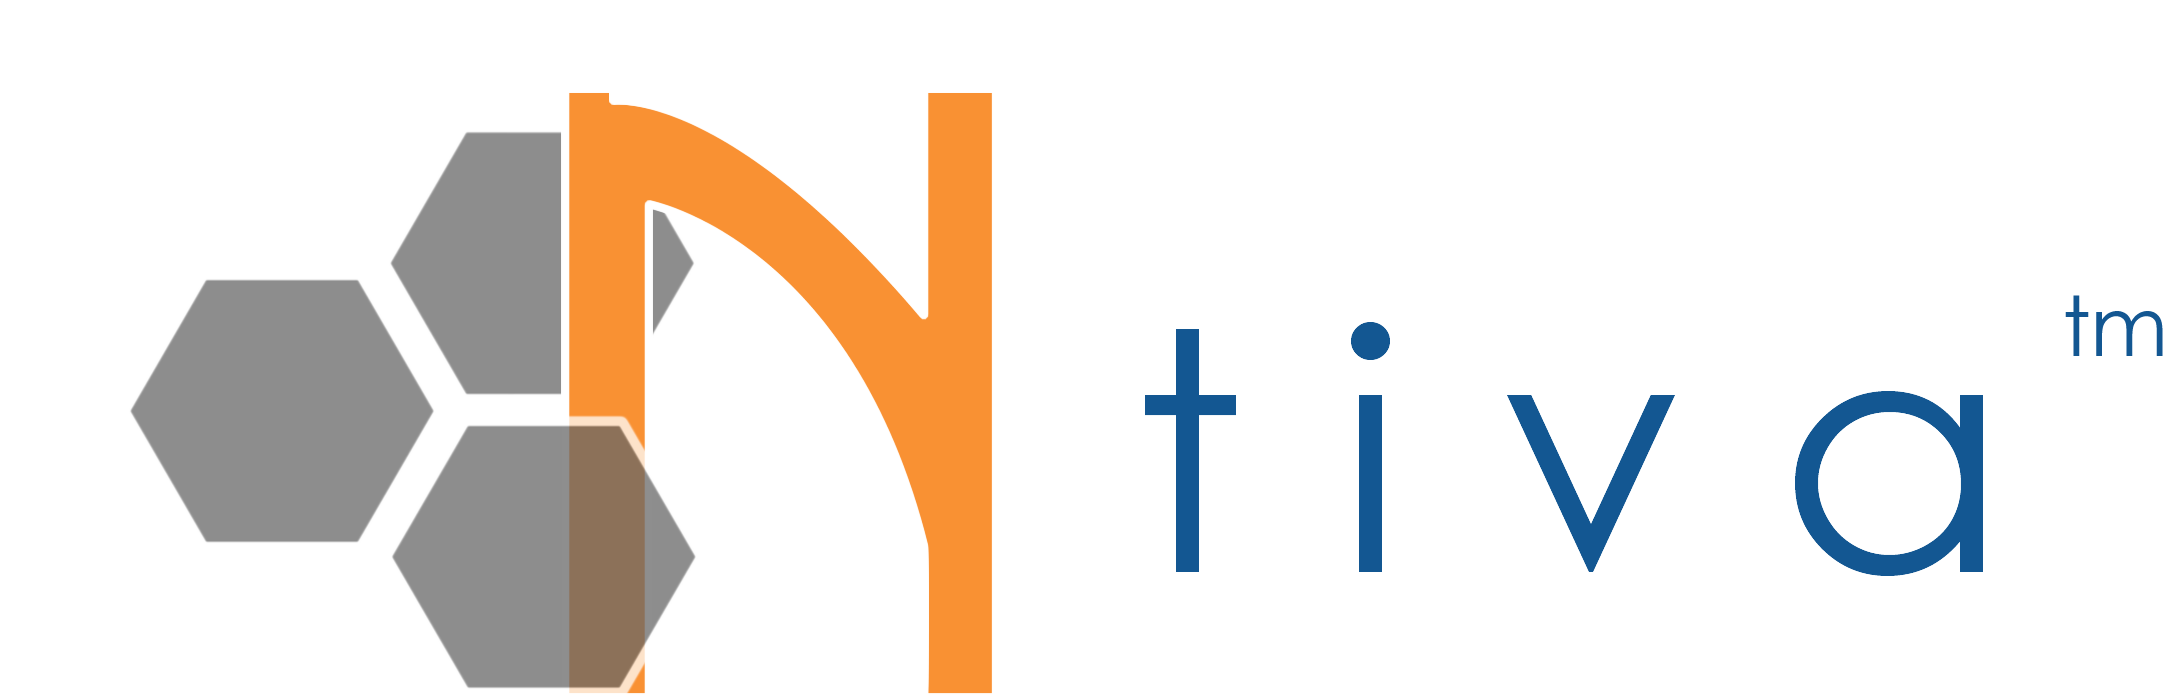 Ntiva Logo.PNG